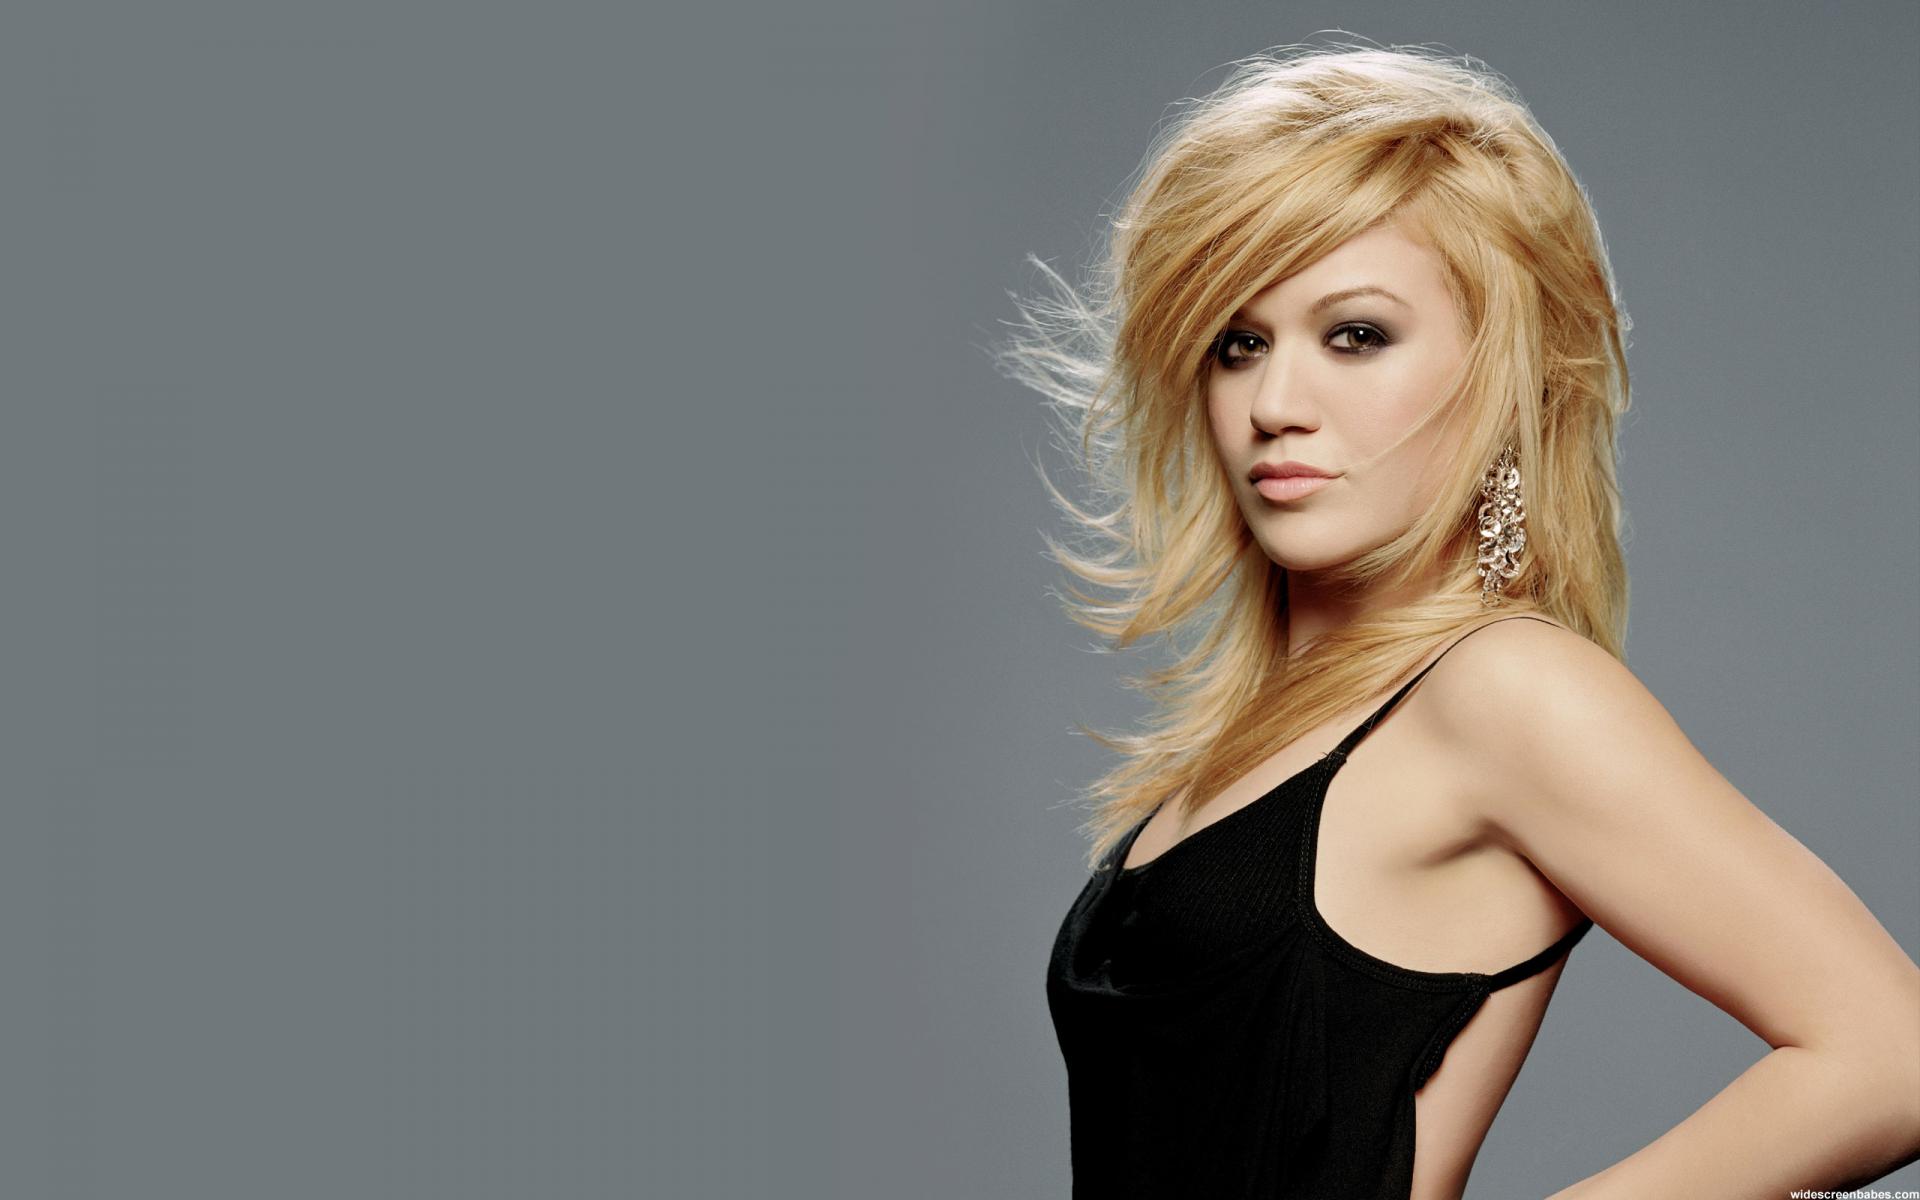 blondes, women, Kelly Clarkson, faces - desktop wallpaper